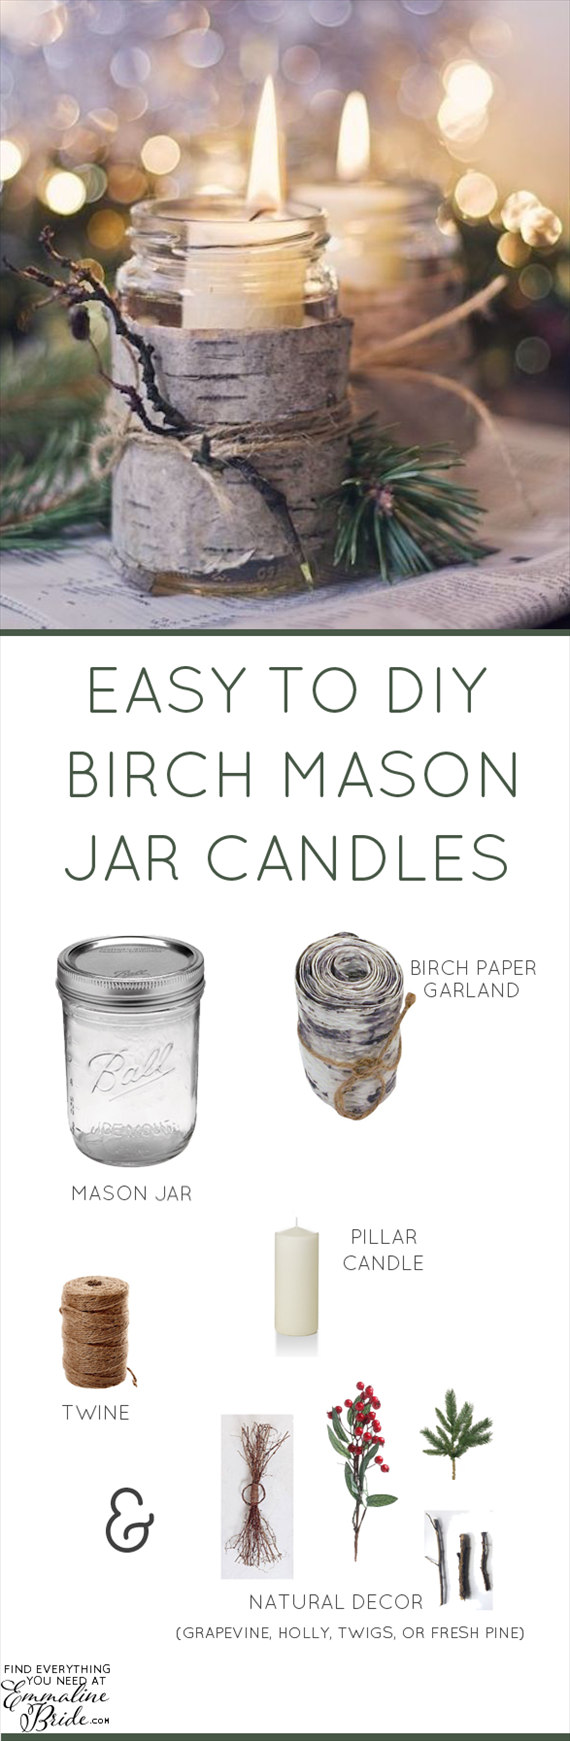 How to Make DIY Birch Mason Jar Candles | https://emmalinebride.com/reception/birch-mason-jar-candles/